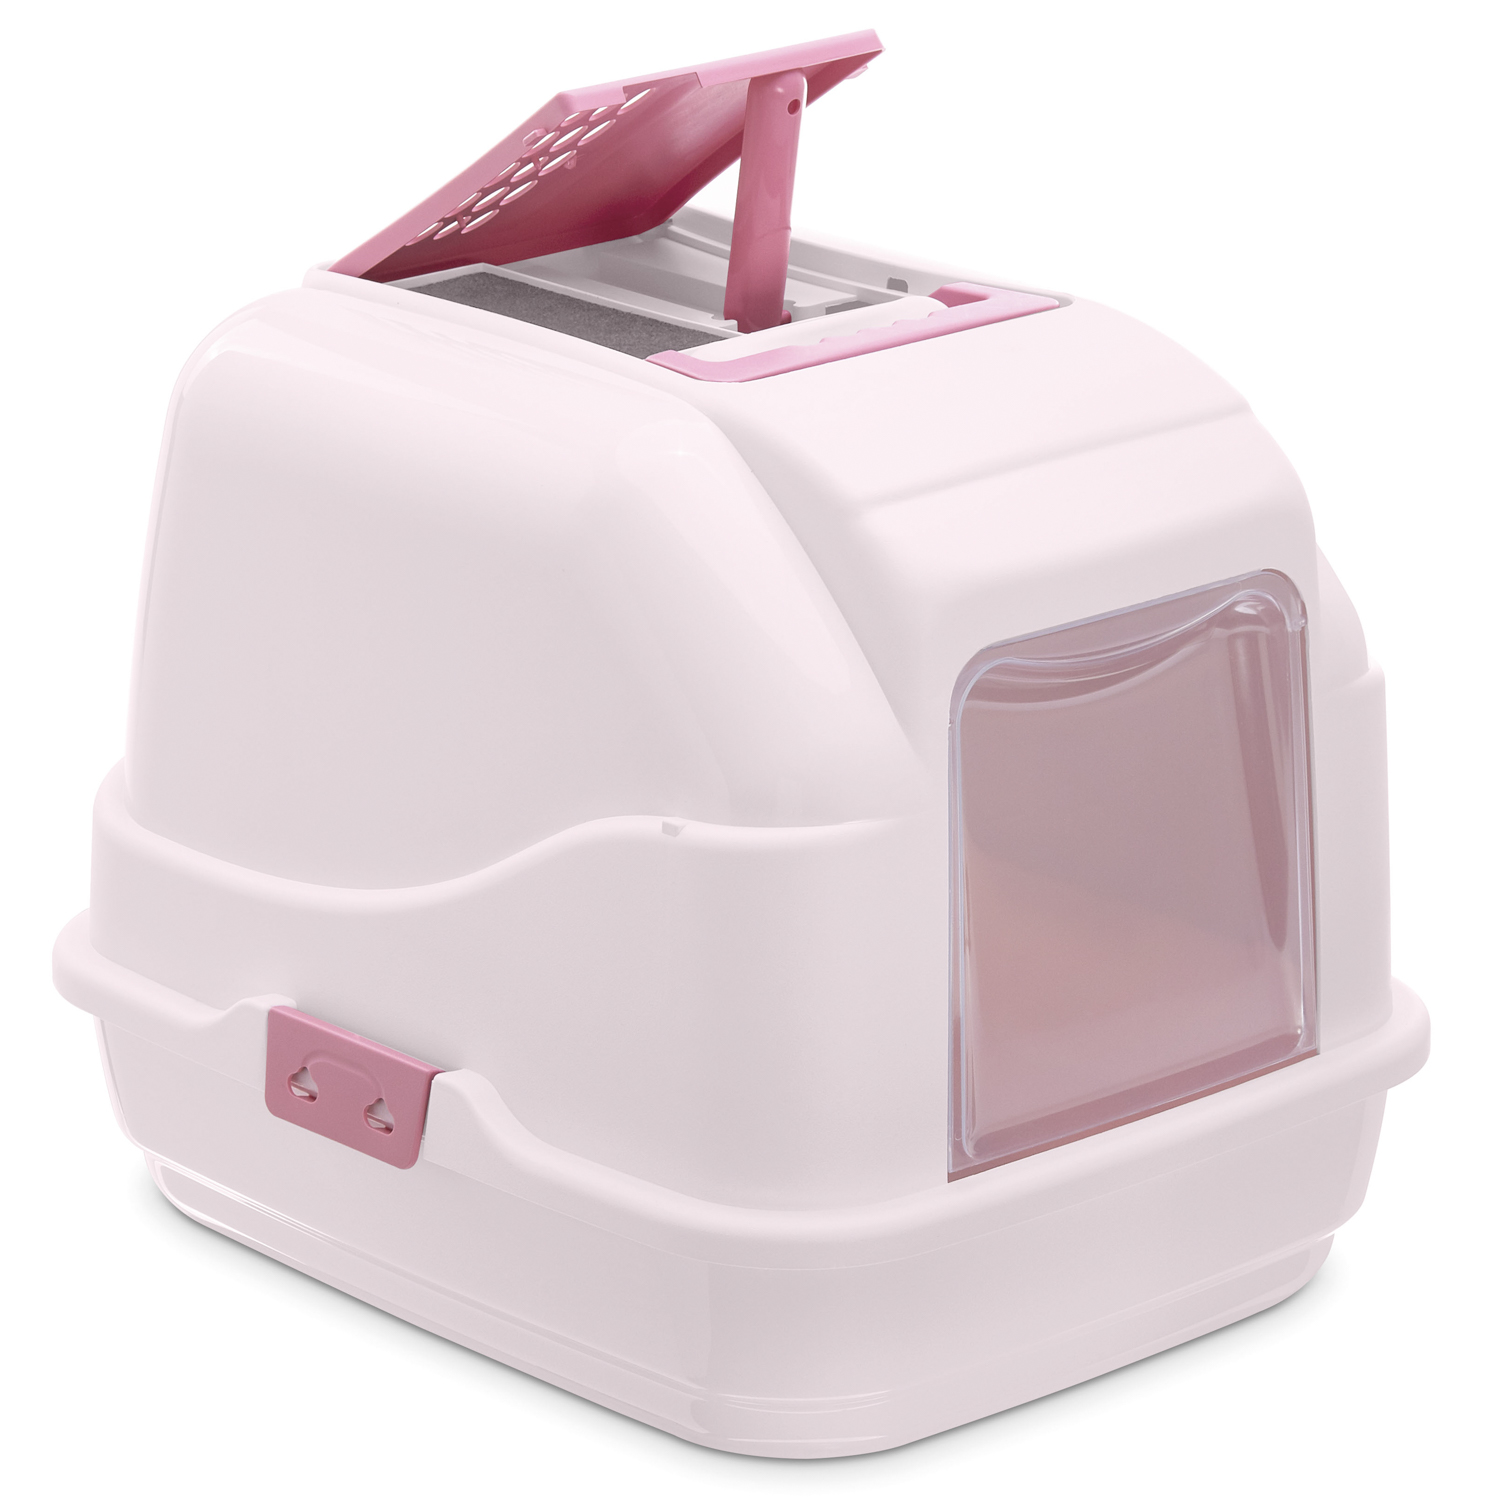 Био-туалет IMAC EASY CAT нежно-розовый д/кош 50х40х40h см